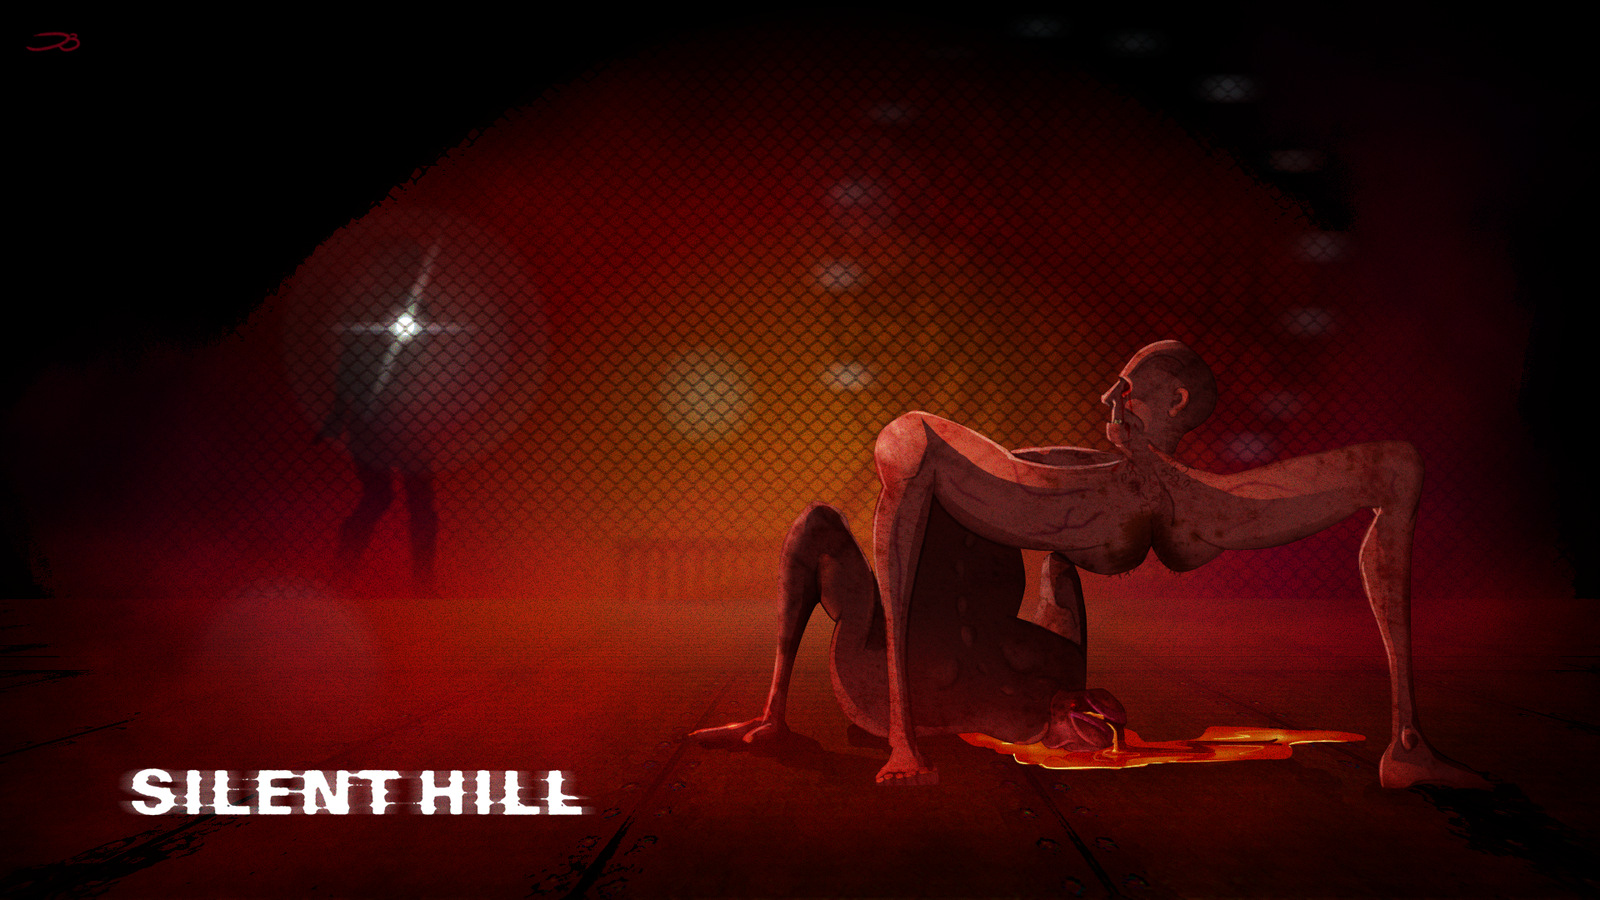 Silent Hill: Fan Art - Character, Characters (edit), Art, Drawing, Game art, Horror, Silent Hill, My